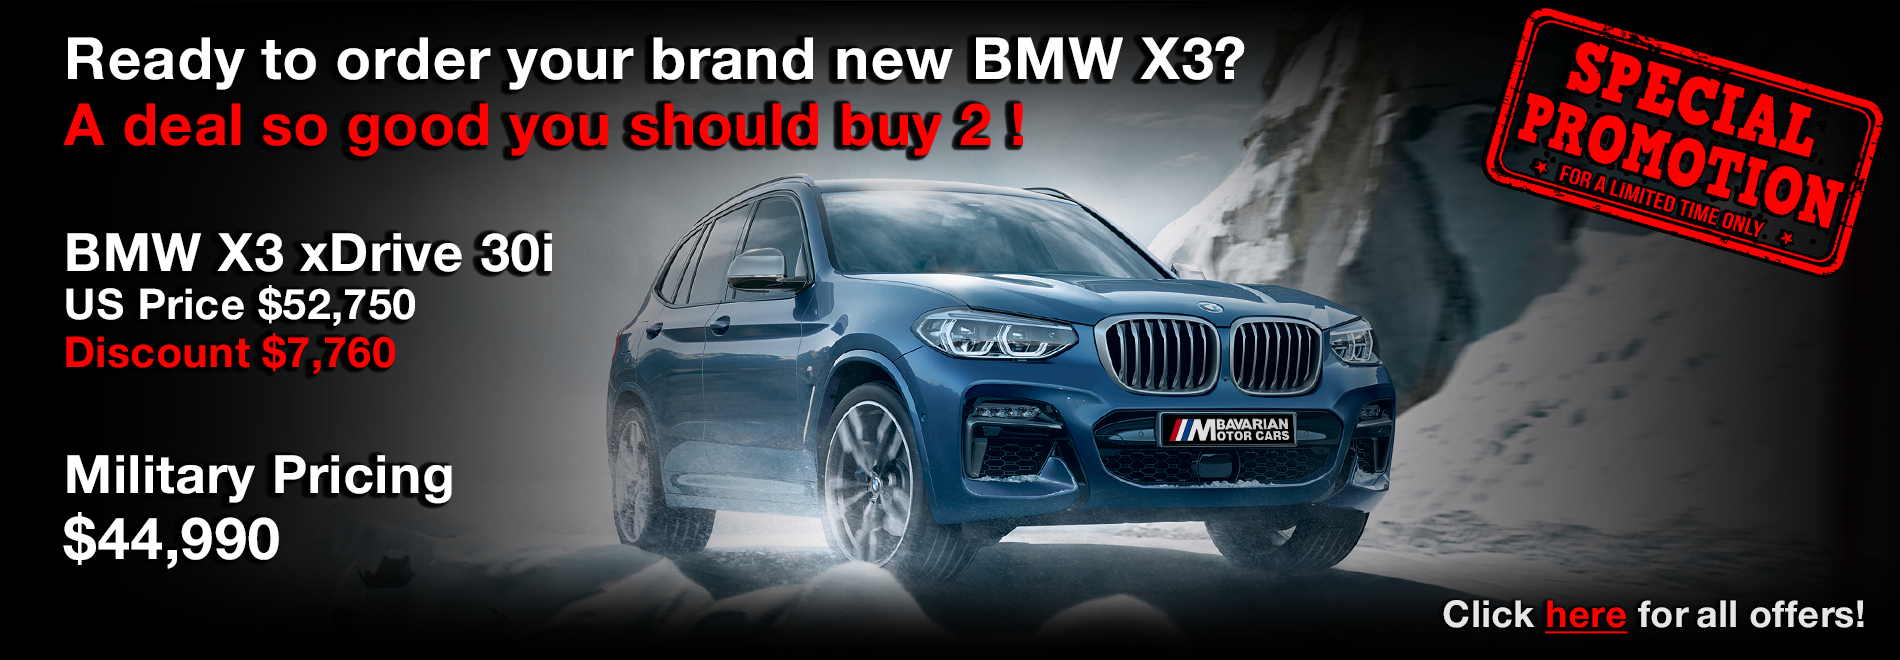 BMW Military Sales | Bavarian Motor Cars  | Special Offer  |  BMW Sale | BMW X3